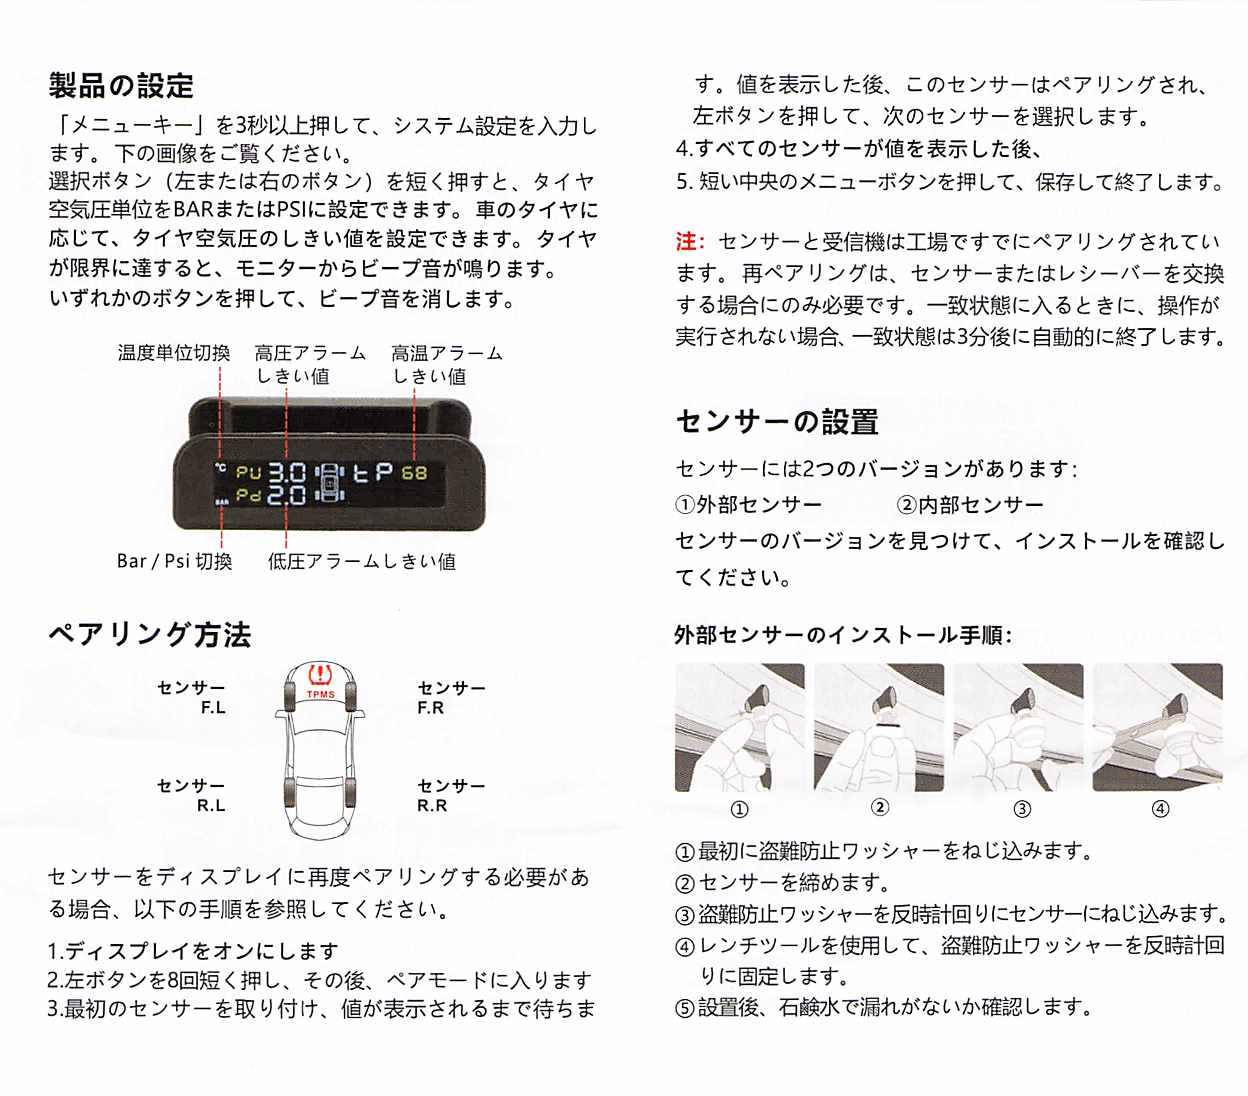 【TPMS】車のタイヤ空気圧をお手軽監視